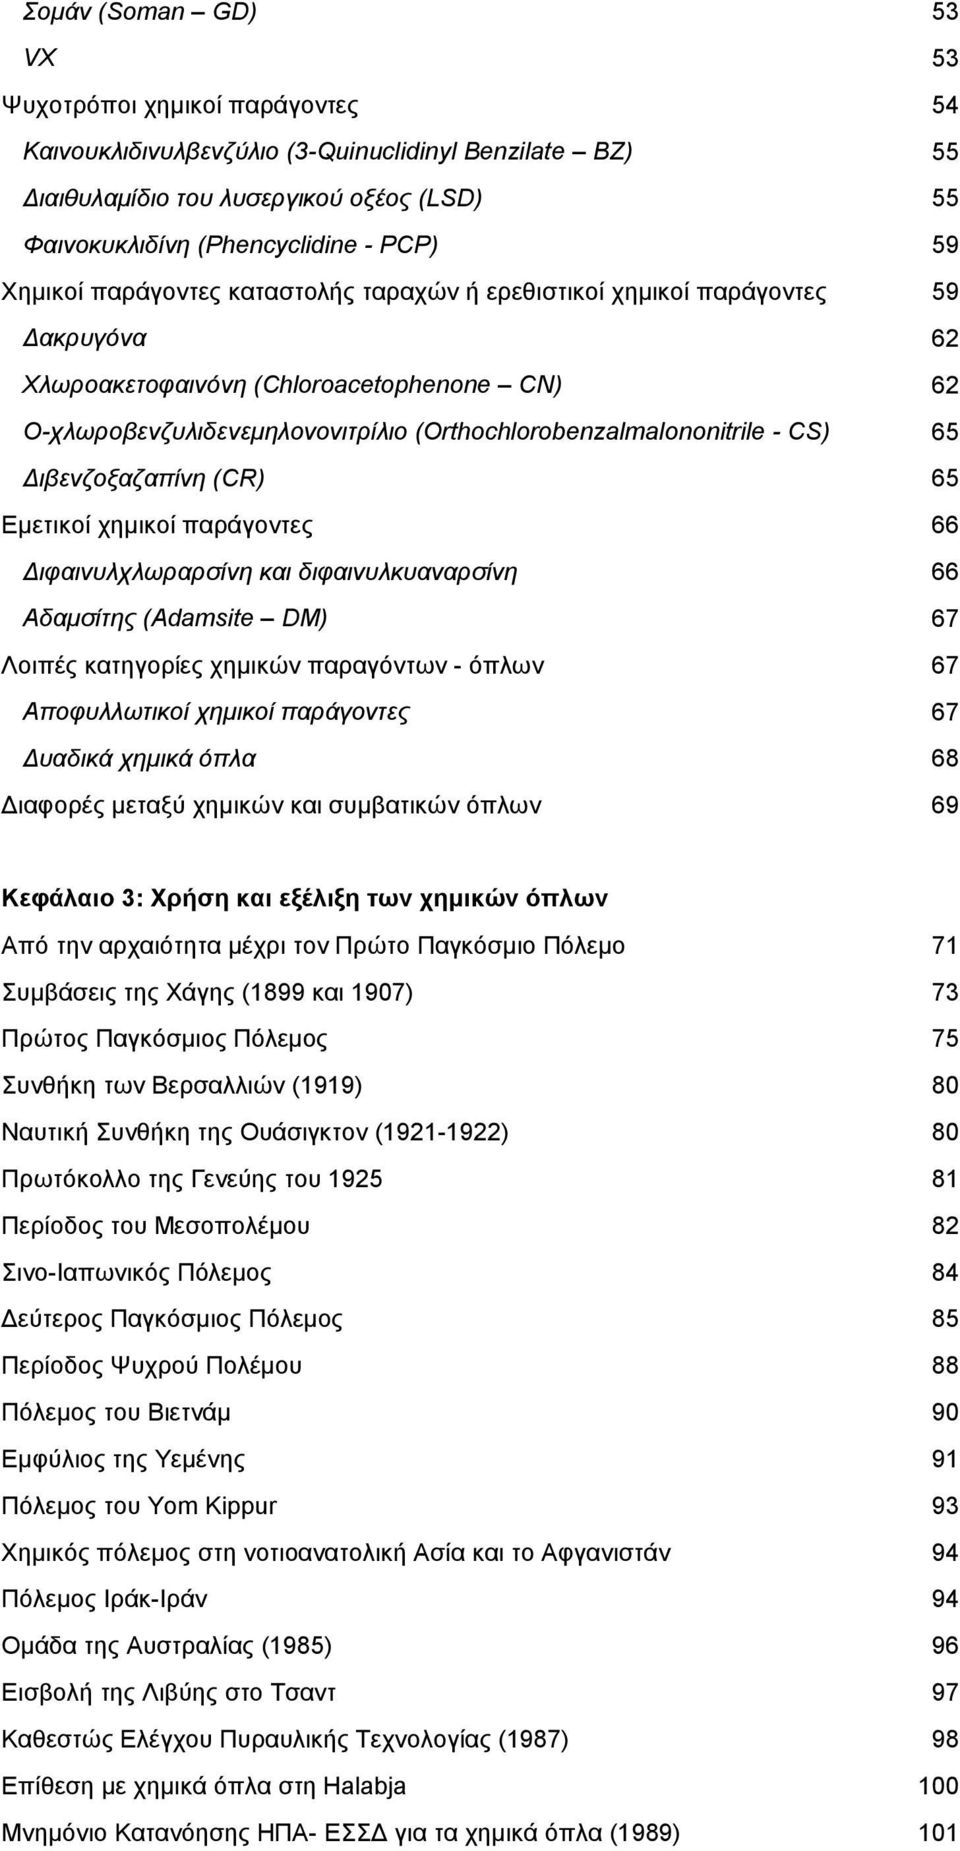 CS) 65 ιβενζοξαζαπίνη (CR) 65 Εµετικοί χηµικοί παράγοντες 66 ιφαινυλχλωραρσίνη και διφαινυλκυαναρσίνη 66 Αδαµσίτης (Adamsite DM) 67 Λοιπές κατηγορίες χηµικών παραγόντων - όπλων 67 Αποφυλλωτικοί